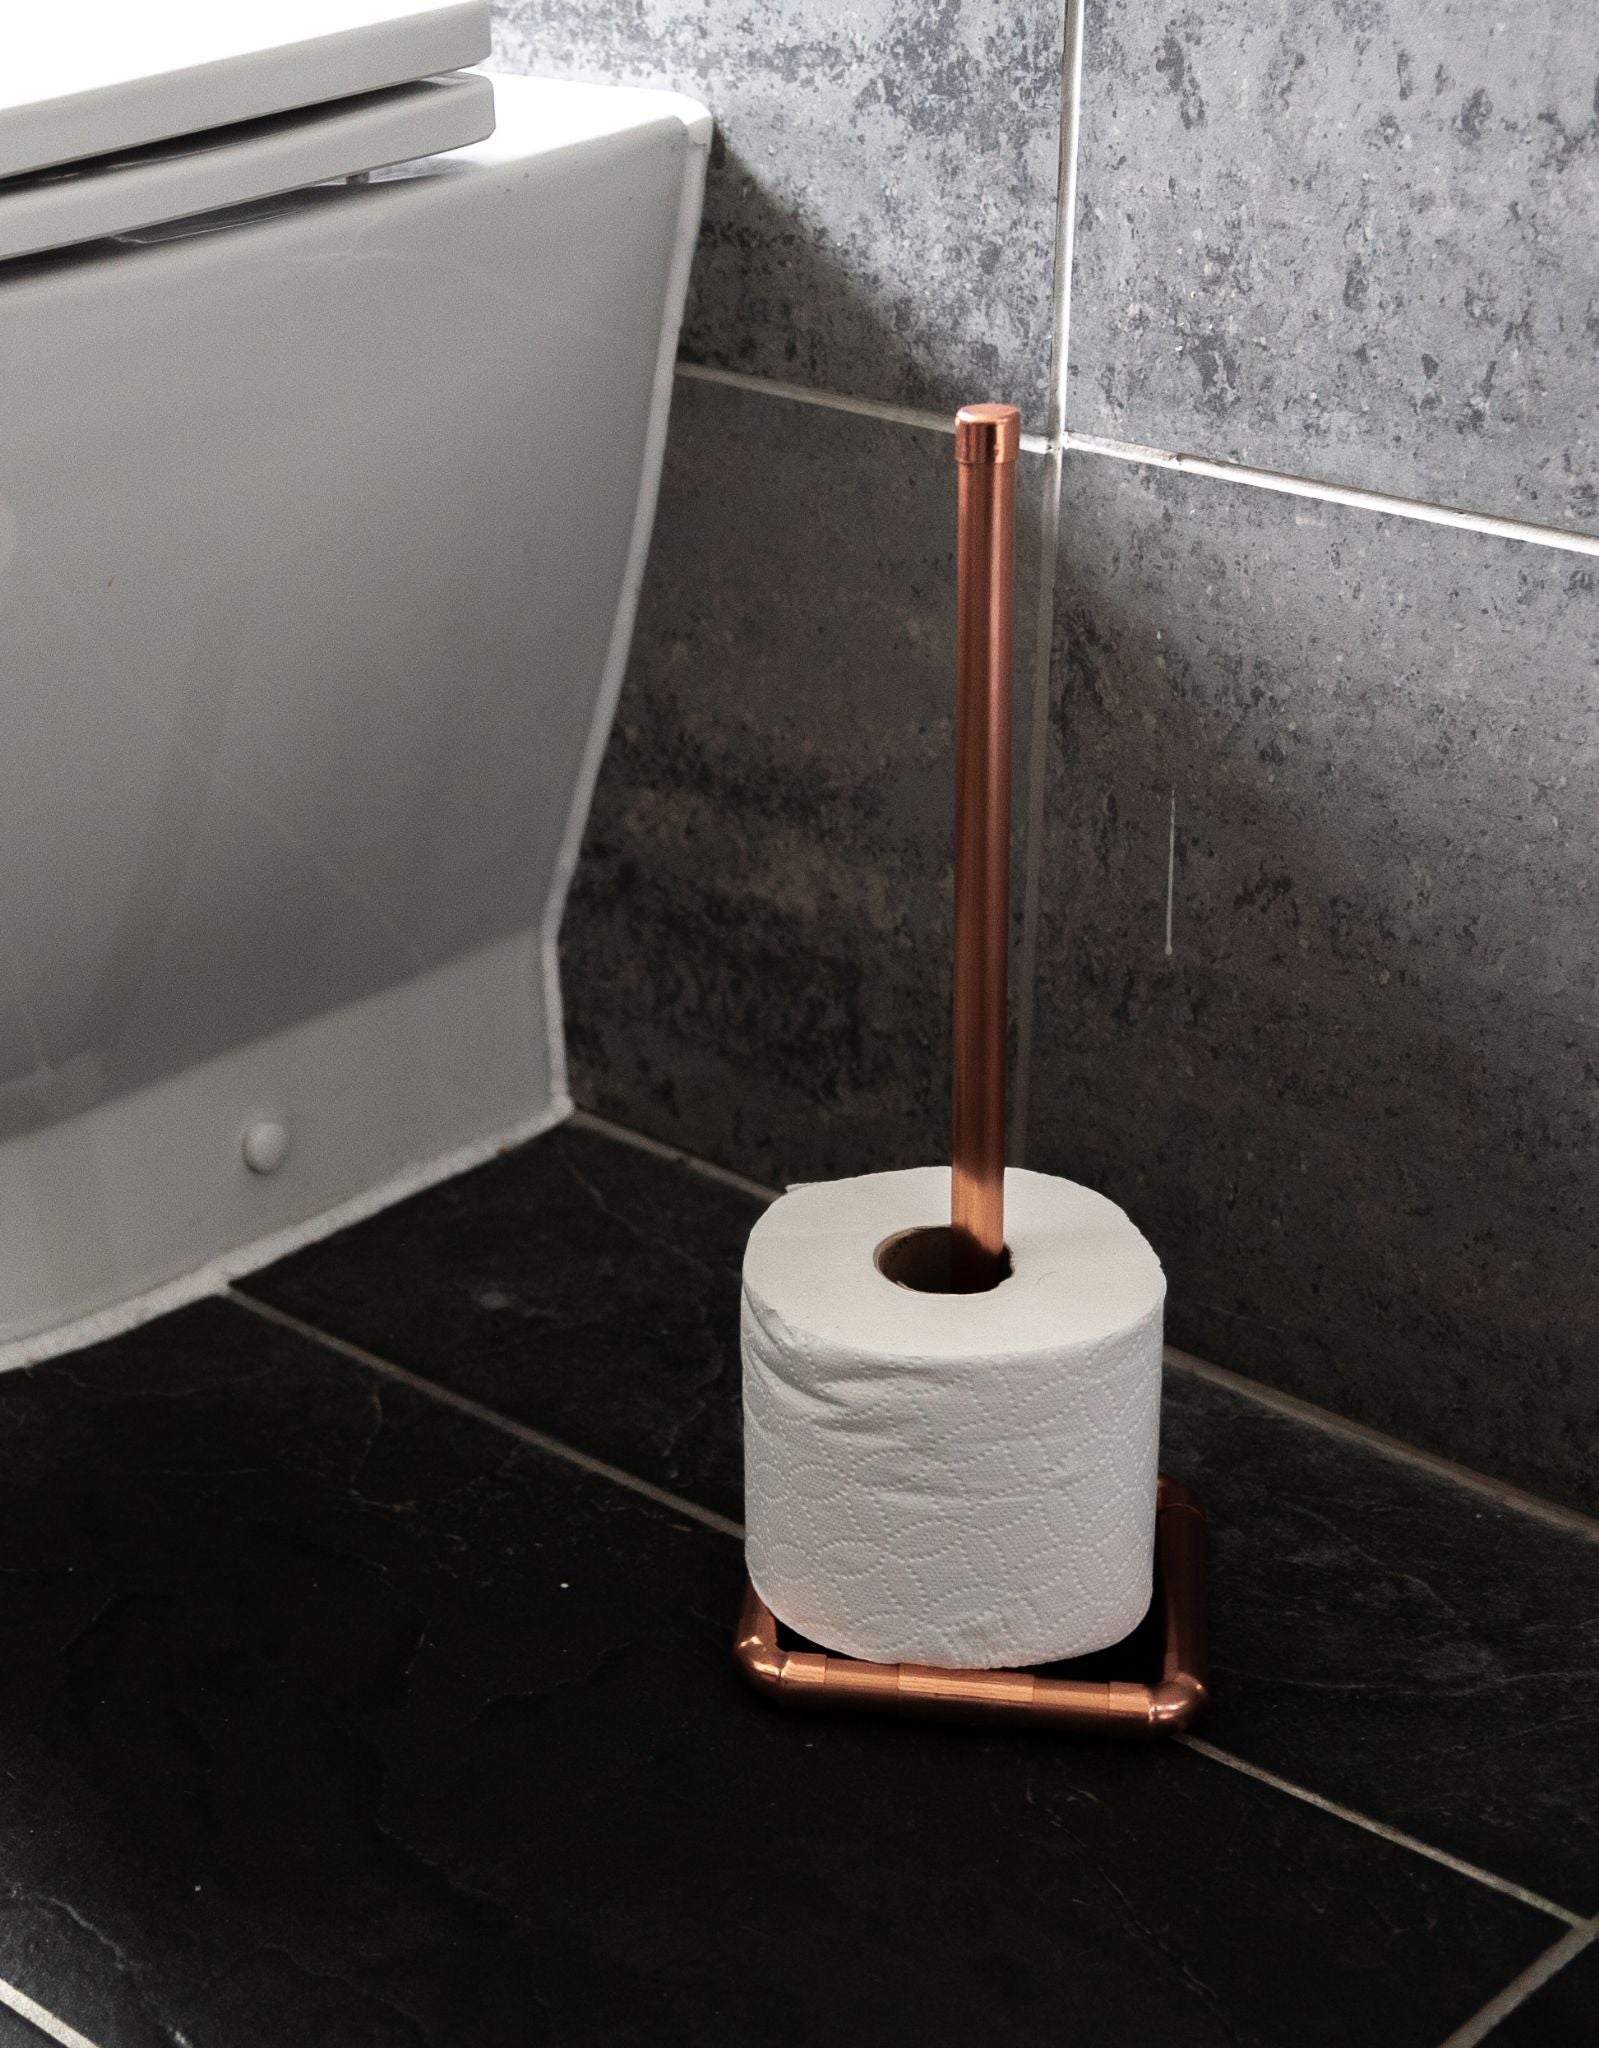 Copper Toilet/Kitchen Roll Holder - Outlet - Save 20%